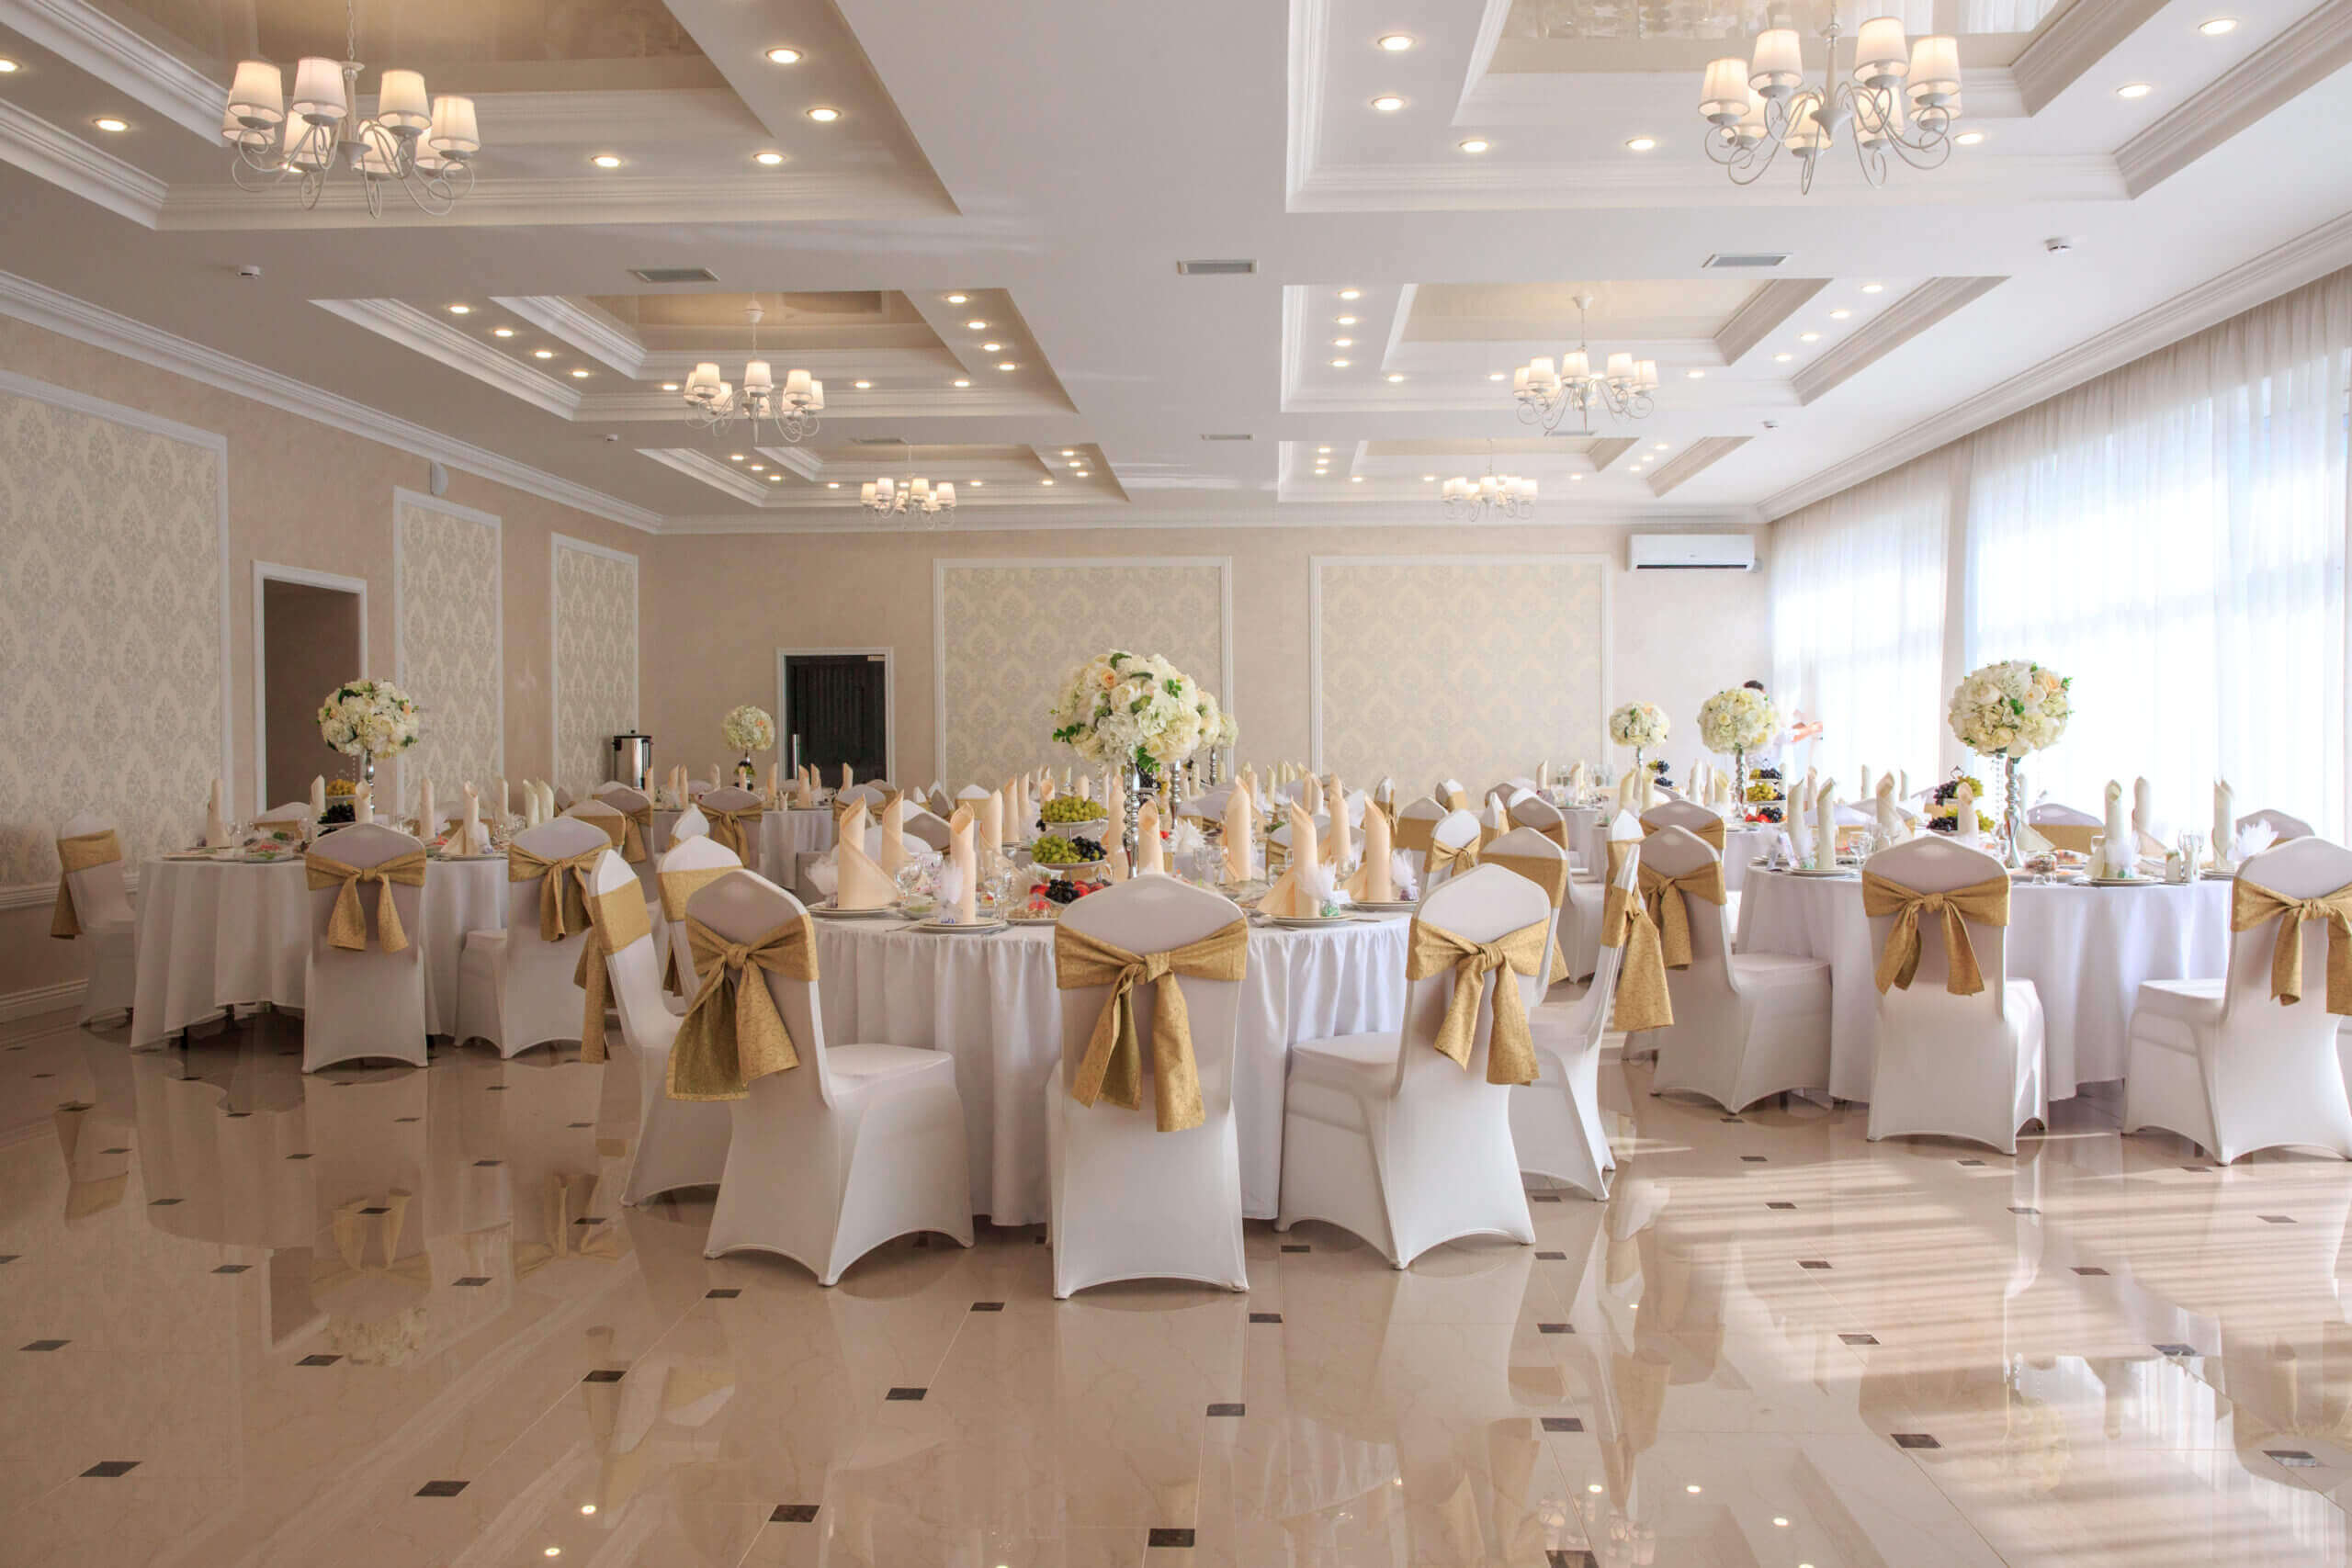 Decorated wedding banquet hall